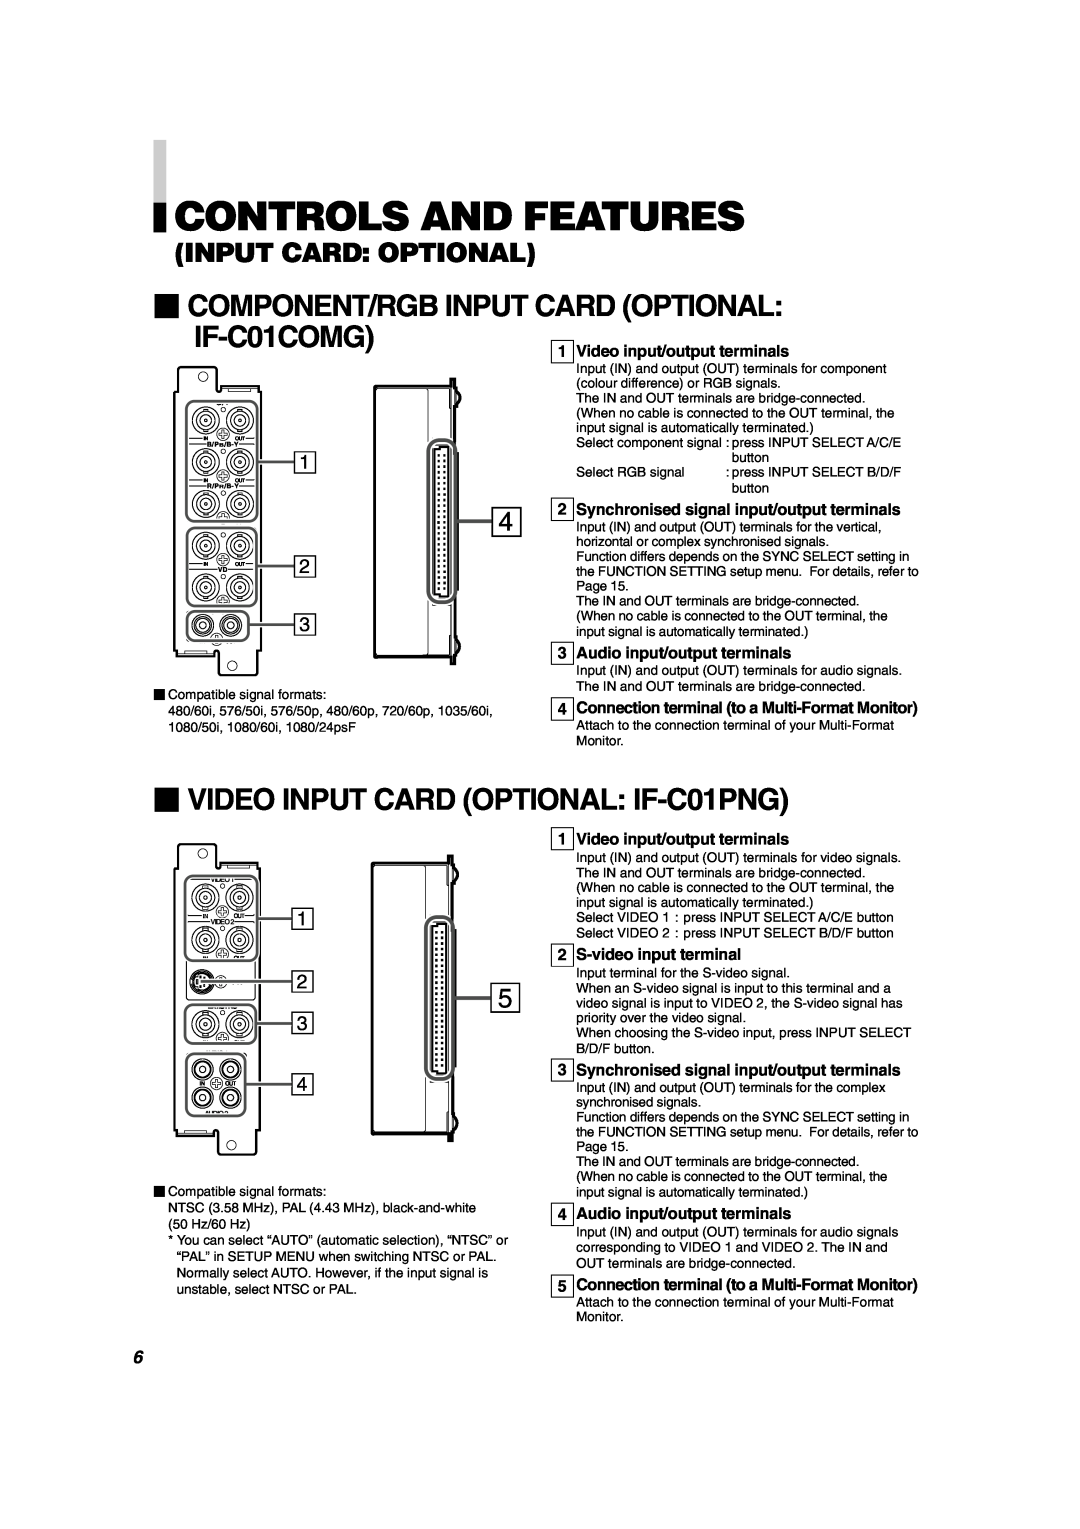 JVC DT-V1900CG  COMPONENT/RGB INPUT CARD OPTIONAL IF-C01COMG,  VIDEO INPUT CARD OPTIONAL IF-C01PNG, Input Card Optional 